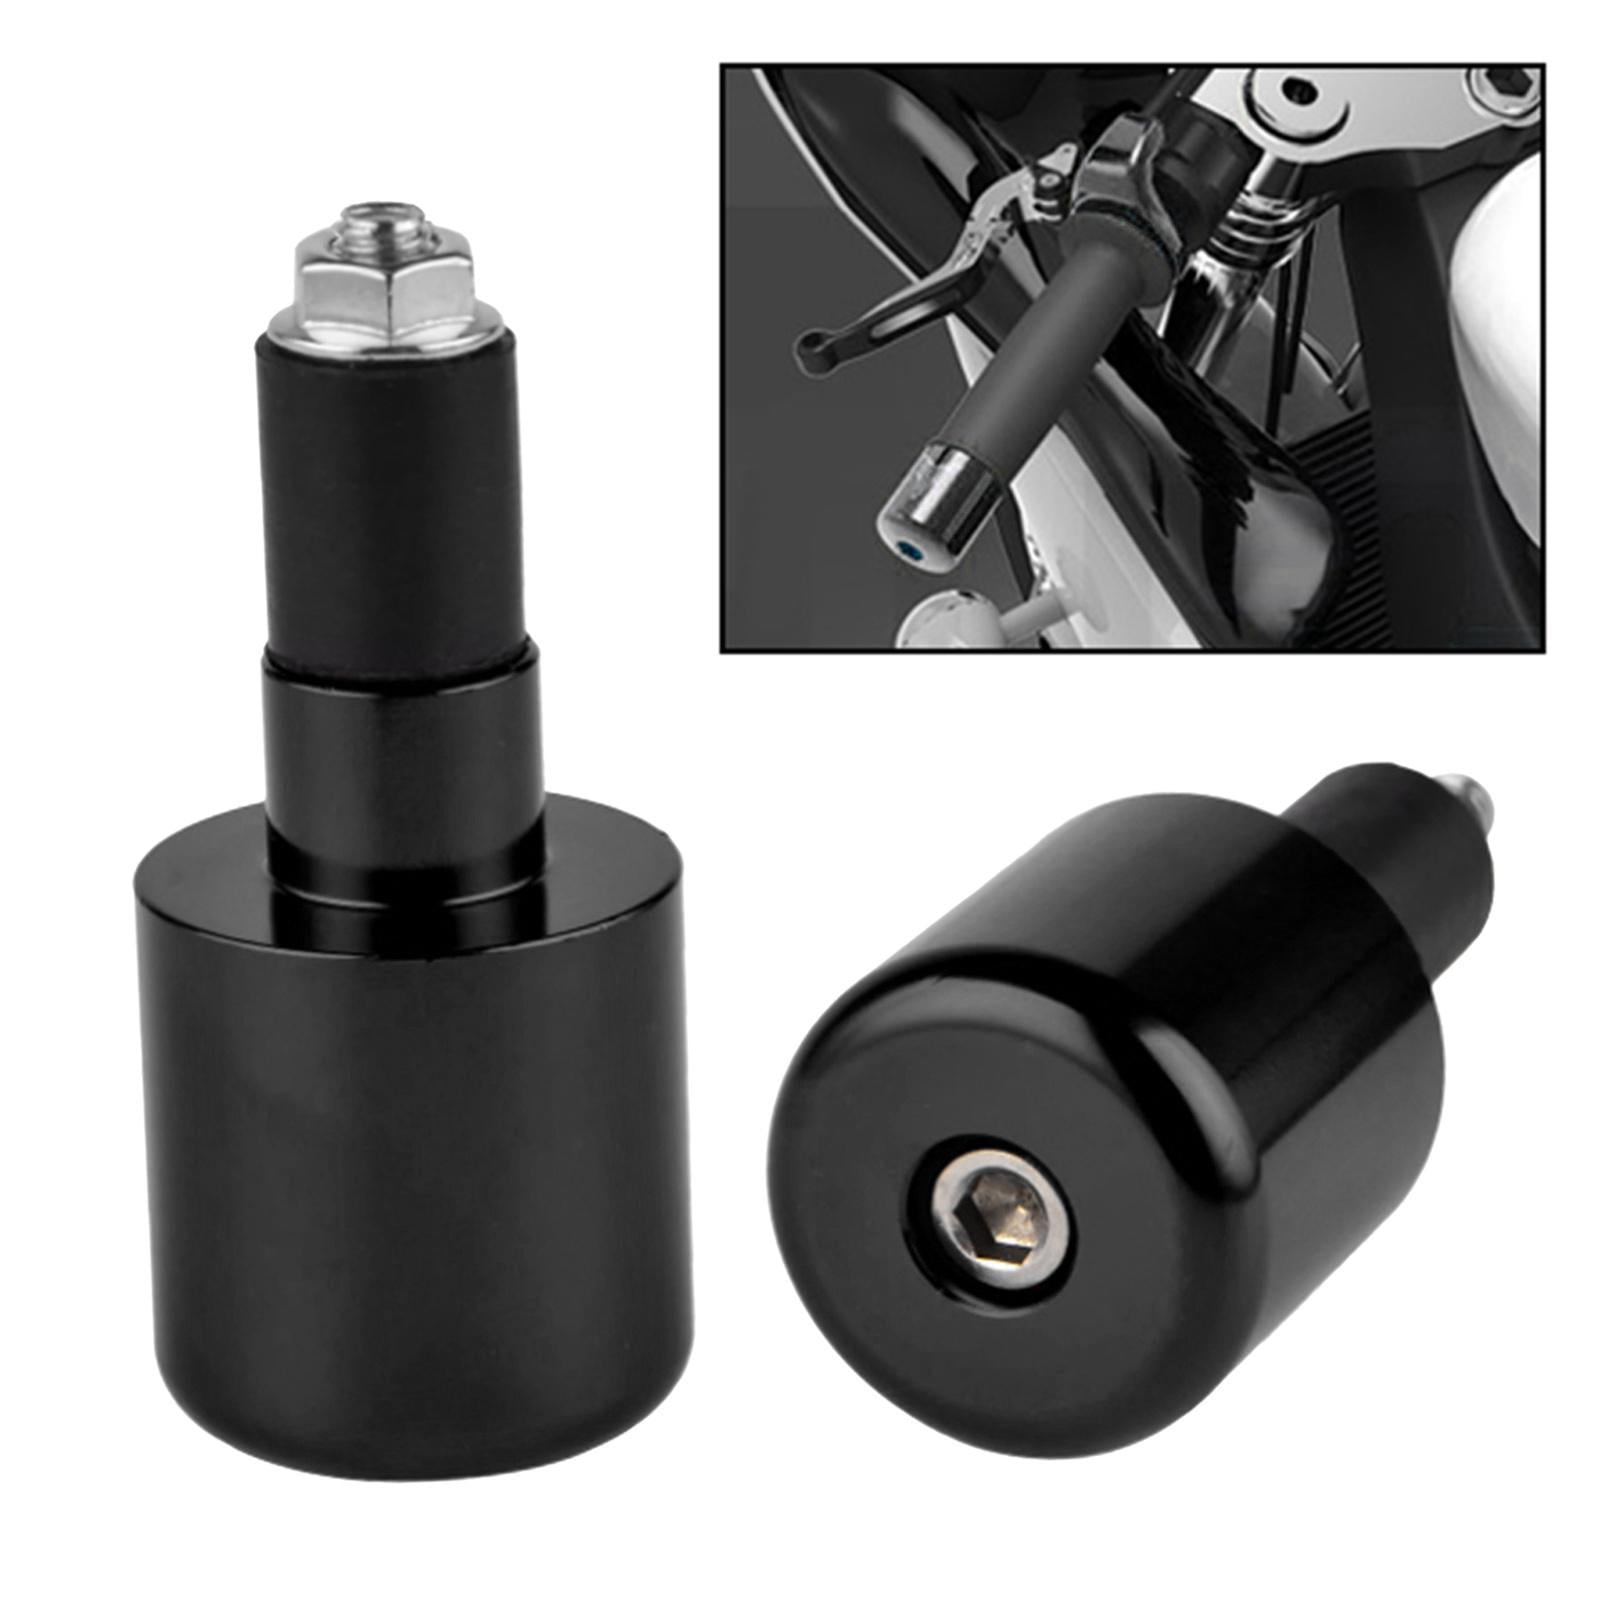 7/8 22mm Motorcycle Handlebar End Aluminum Handle Bar Grips Cap Gear Balanced Plug for Suzuki GSXR 600 750 1000 1300 gold 